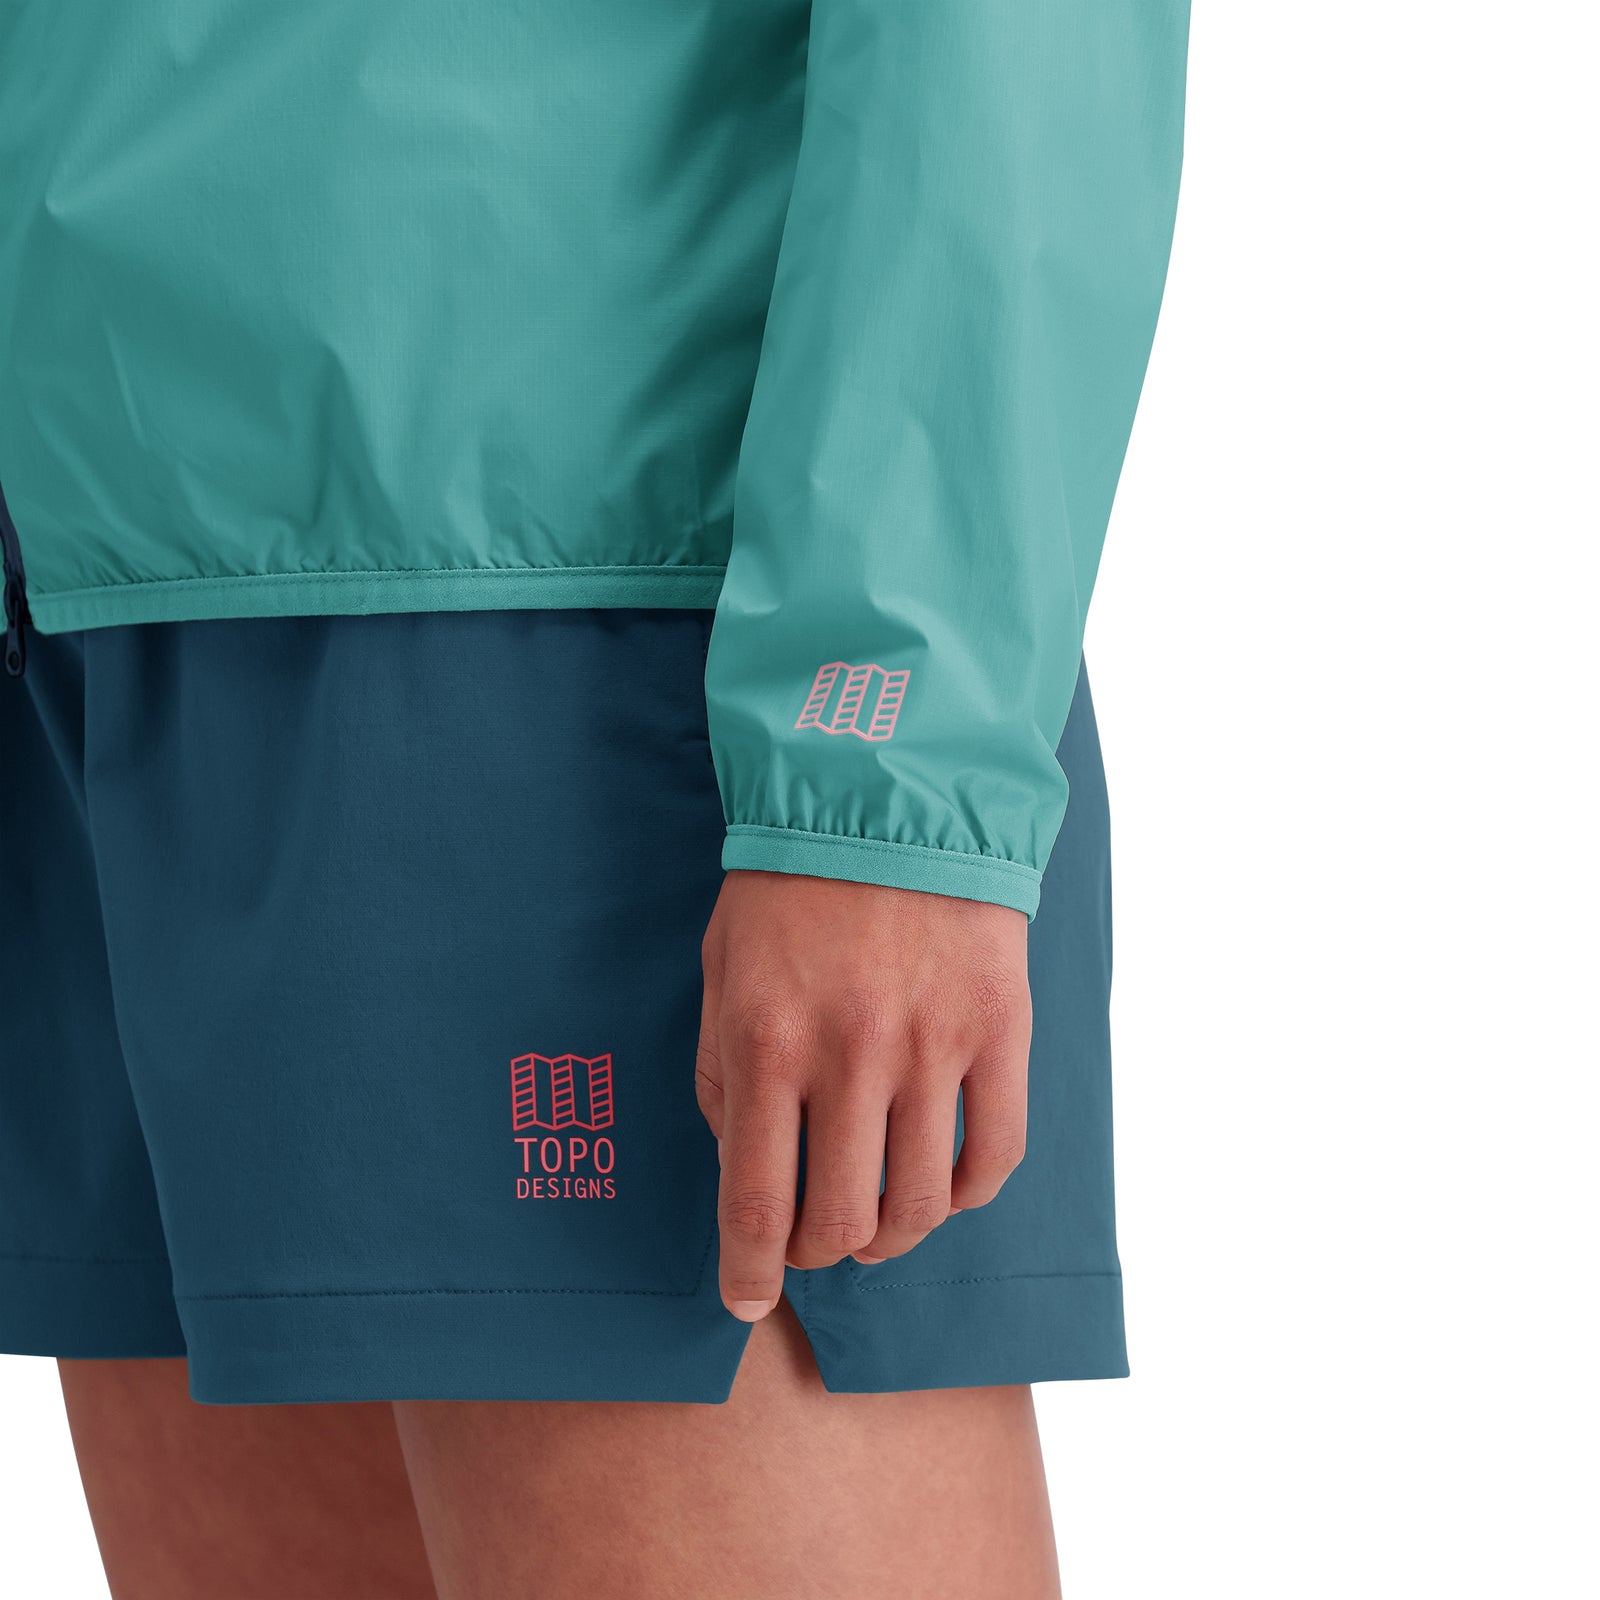 Detail shot of Topo Designs Global Ultralight Packable Jacket - Women's in "Caribbean"